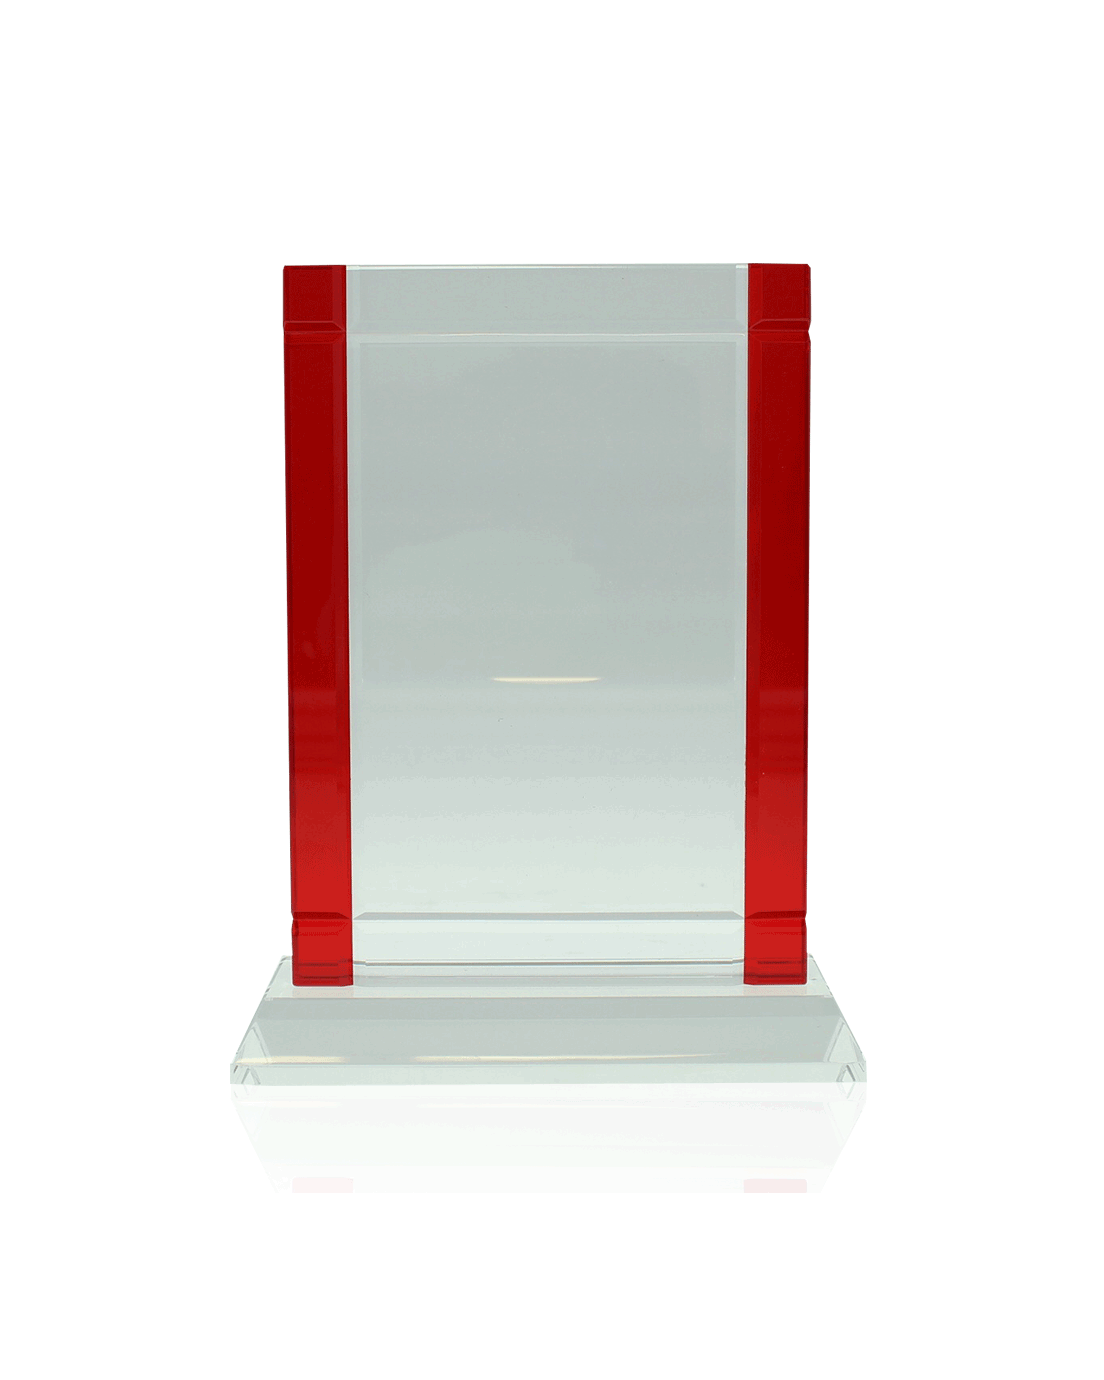 Deco Award Red